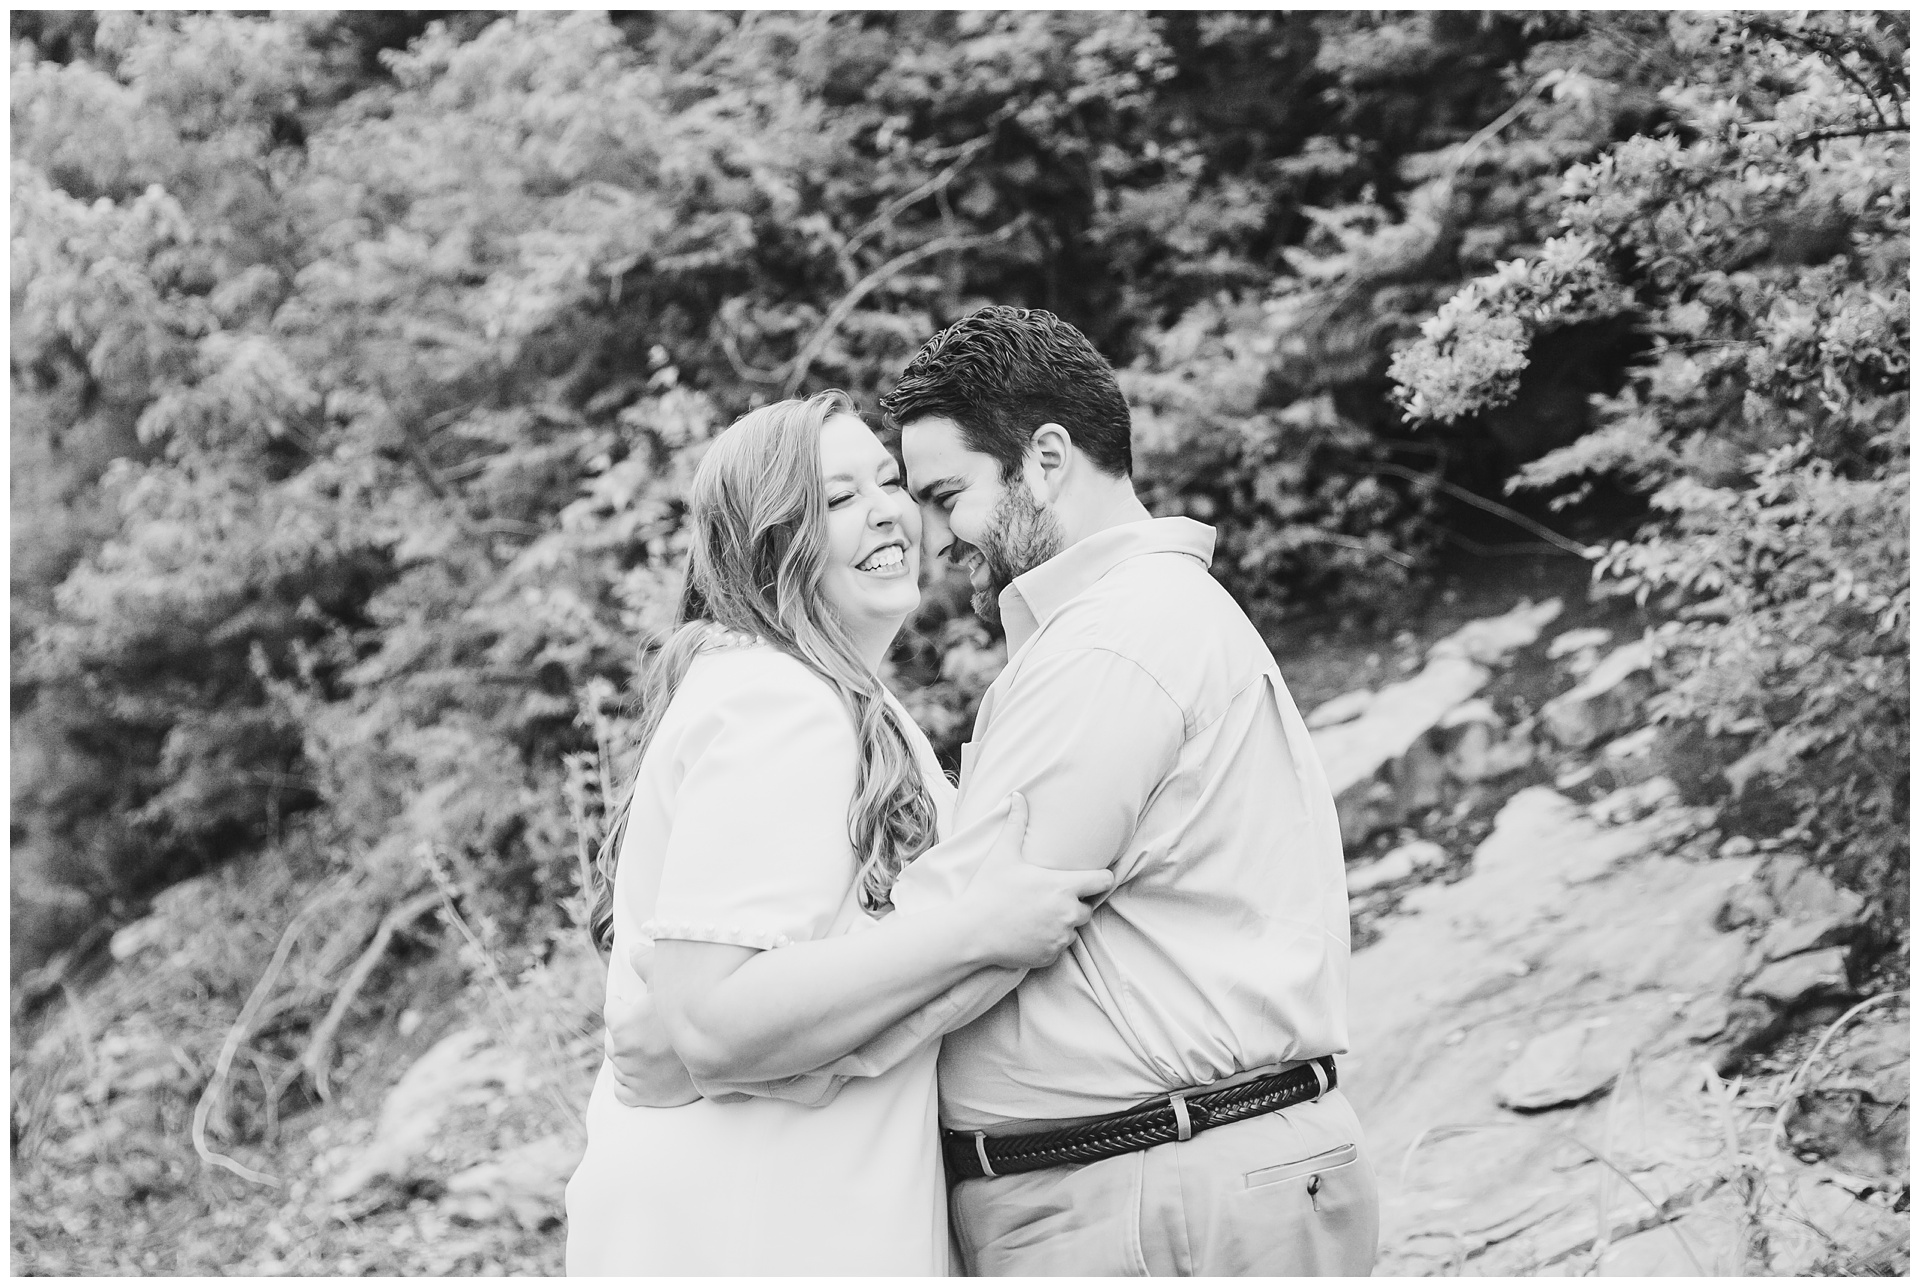 Engagement photography at Briarcliff Waterfall Park by Kansas City wedding photographers Wisdom-Watson Weddings.